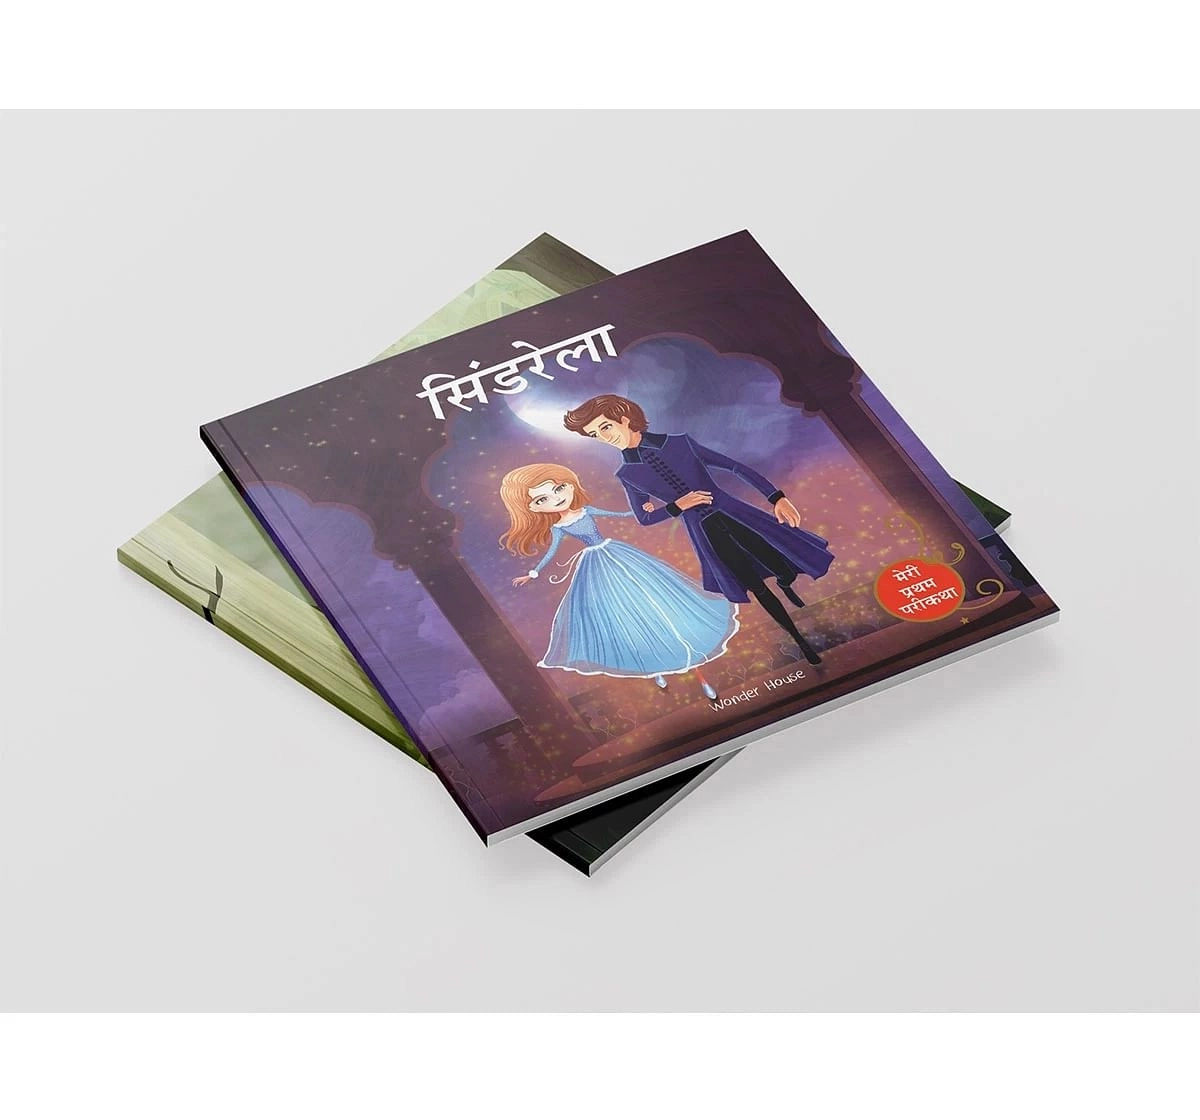 Wonder House Books Cinderella Fairy Tale Meri Pratham Parikatha Fairy Tale In Hindi Book for kids 0M+, Multicolour